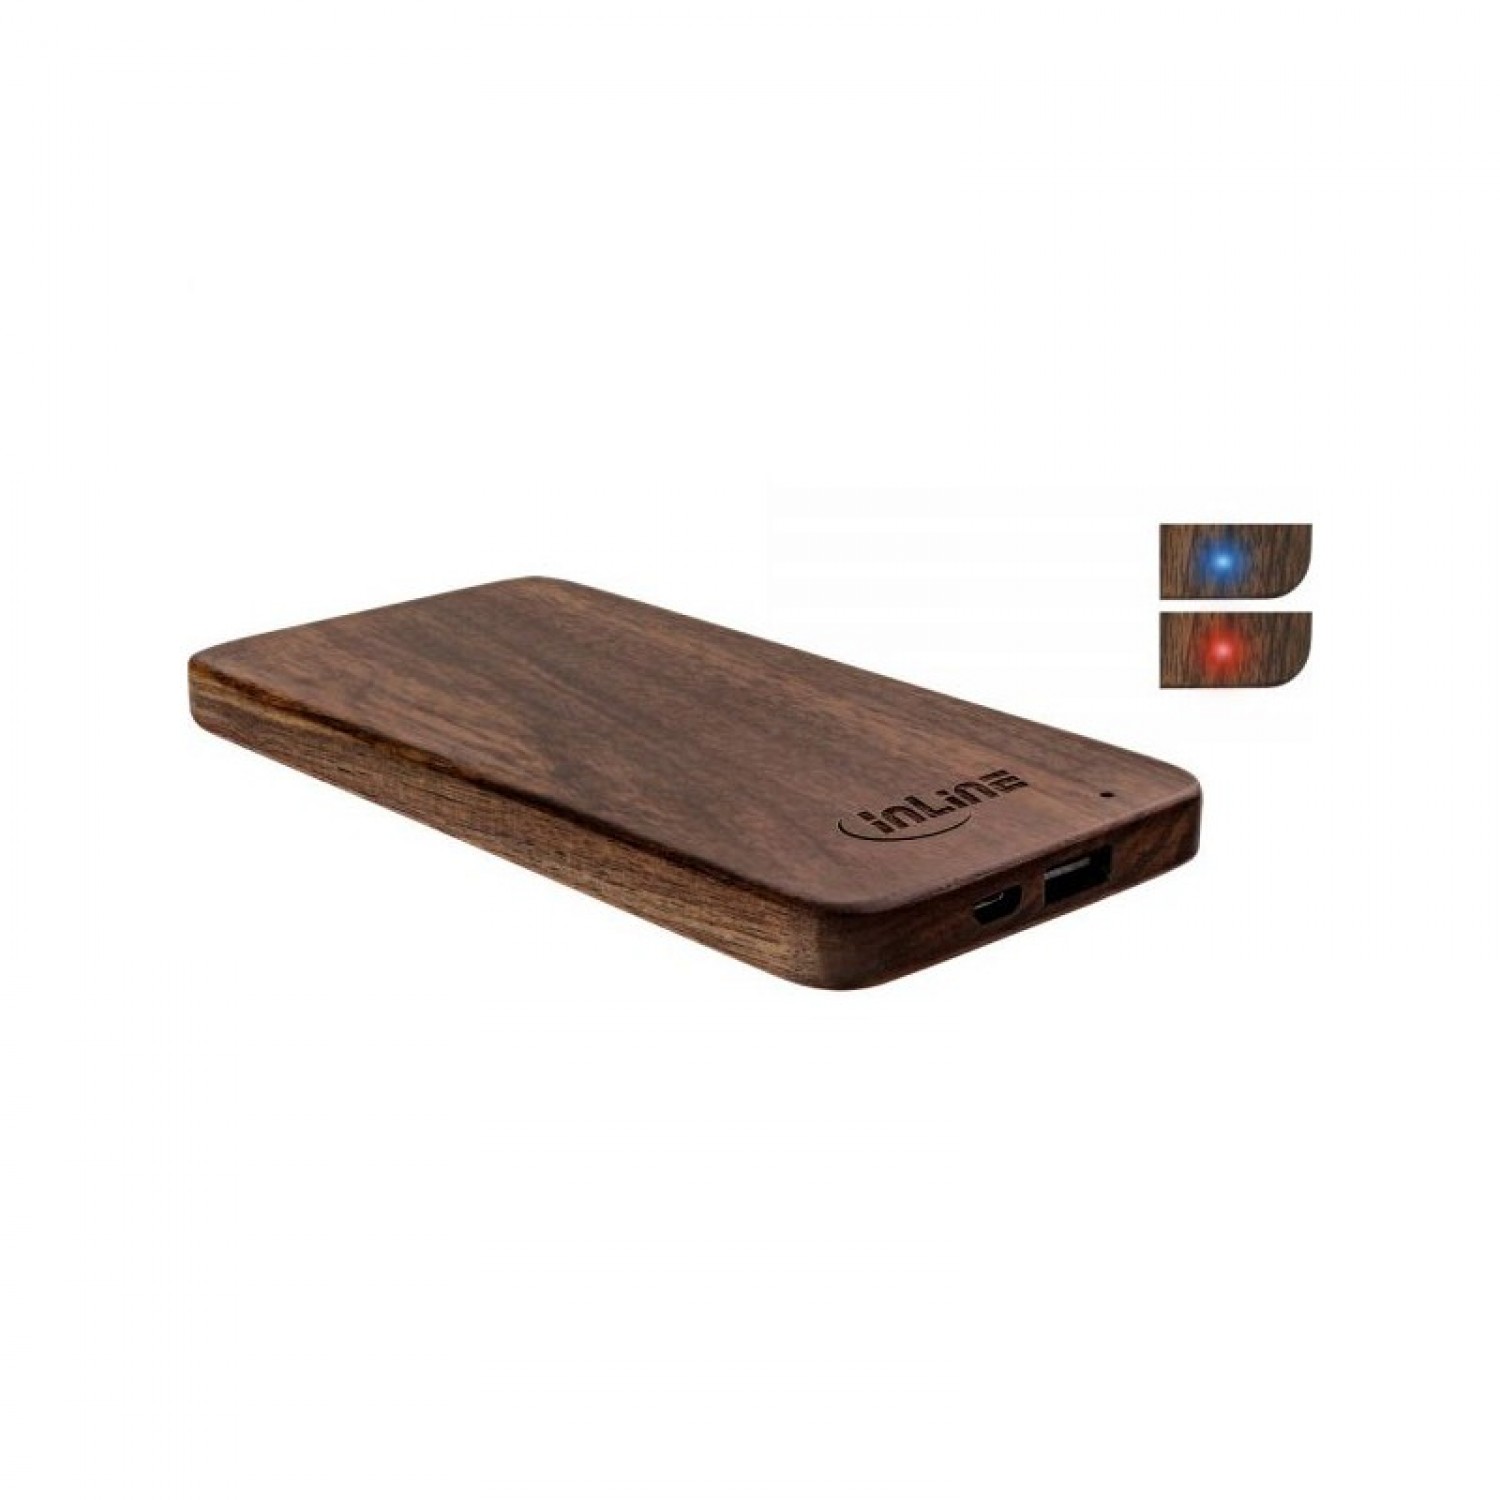 USB Powerbank from Walnut Wood - InLine woodplate